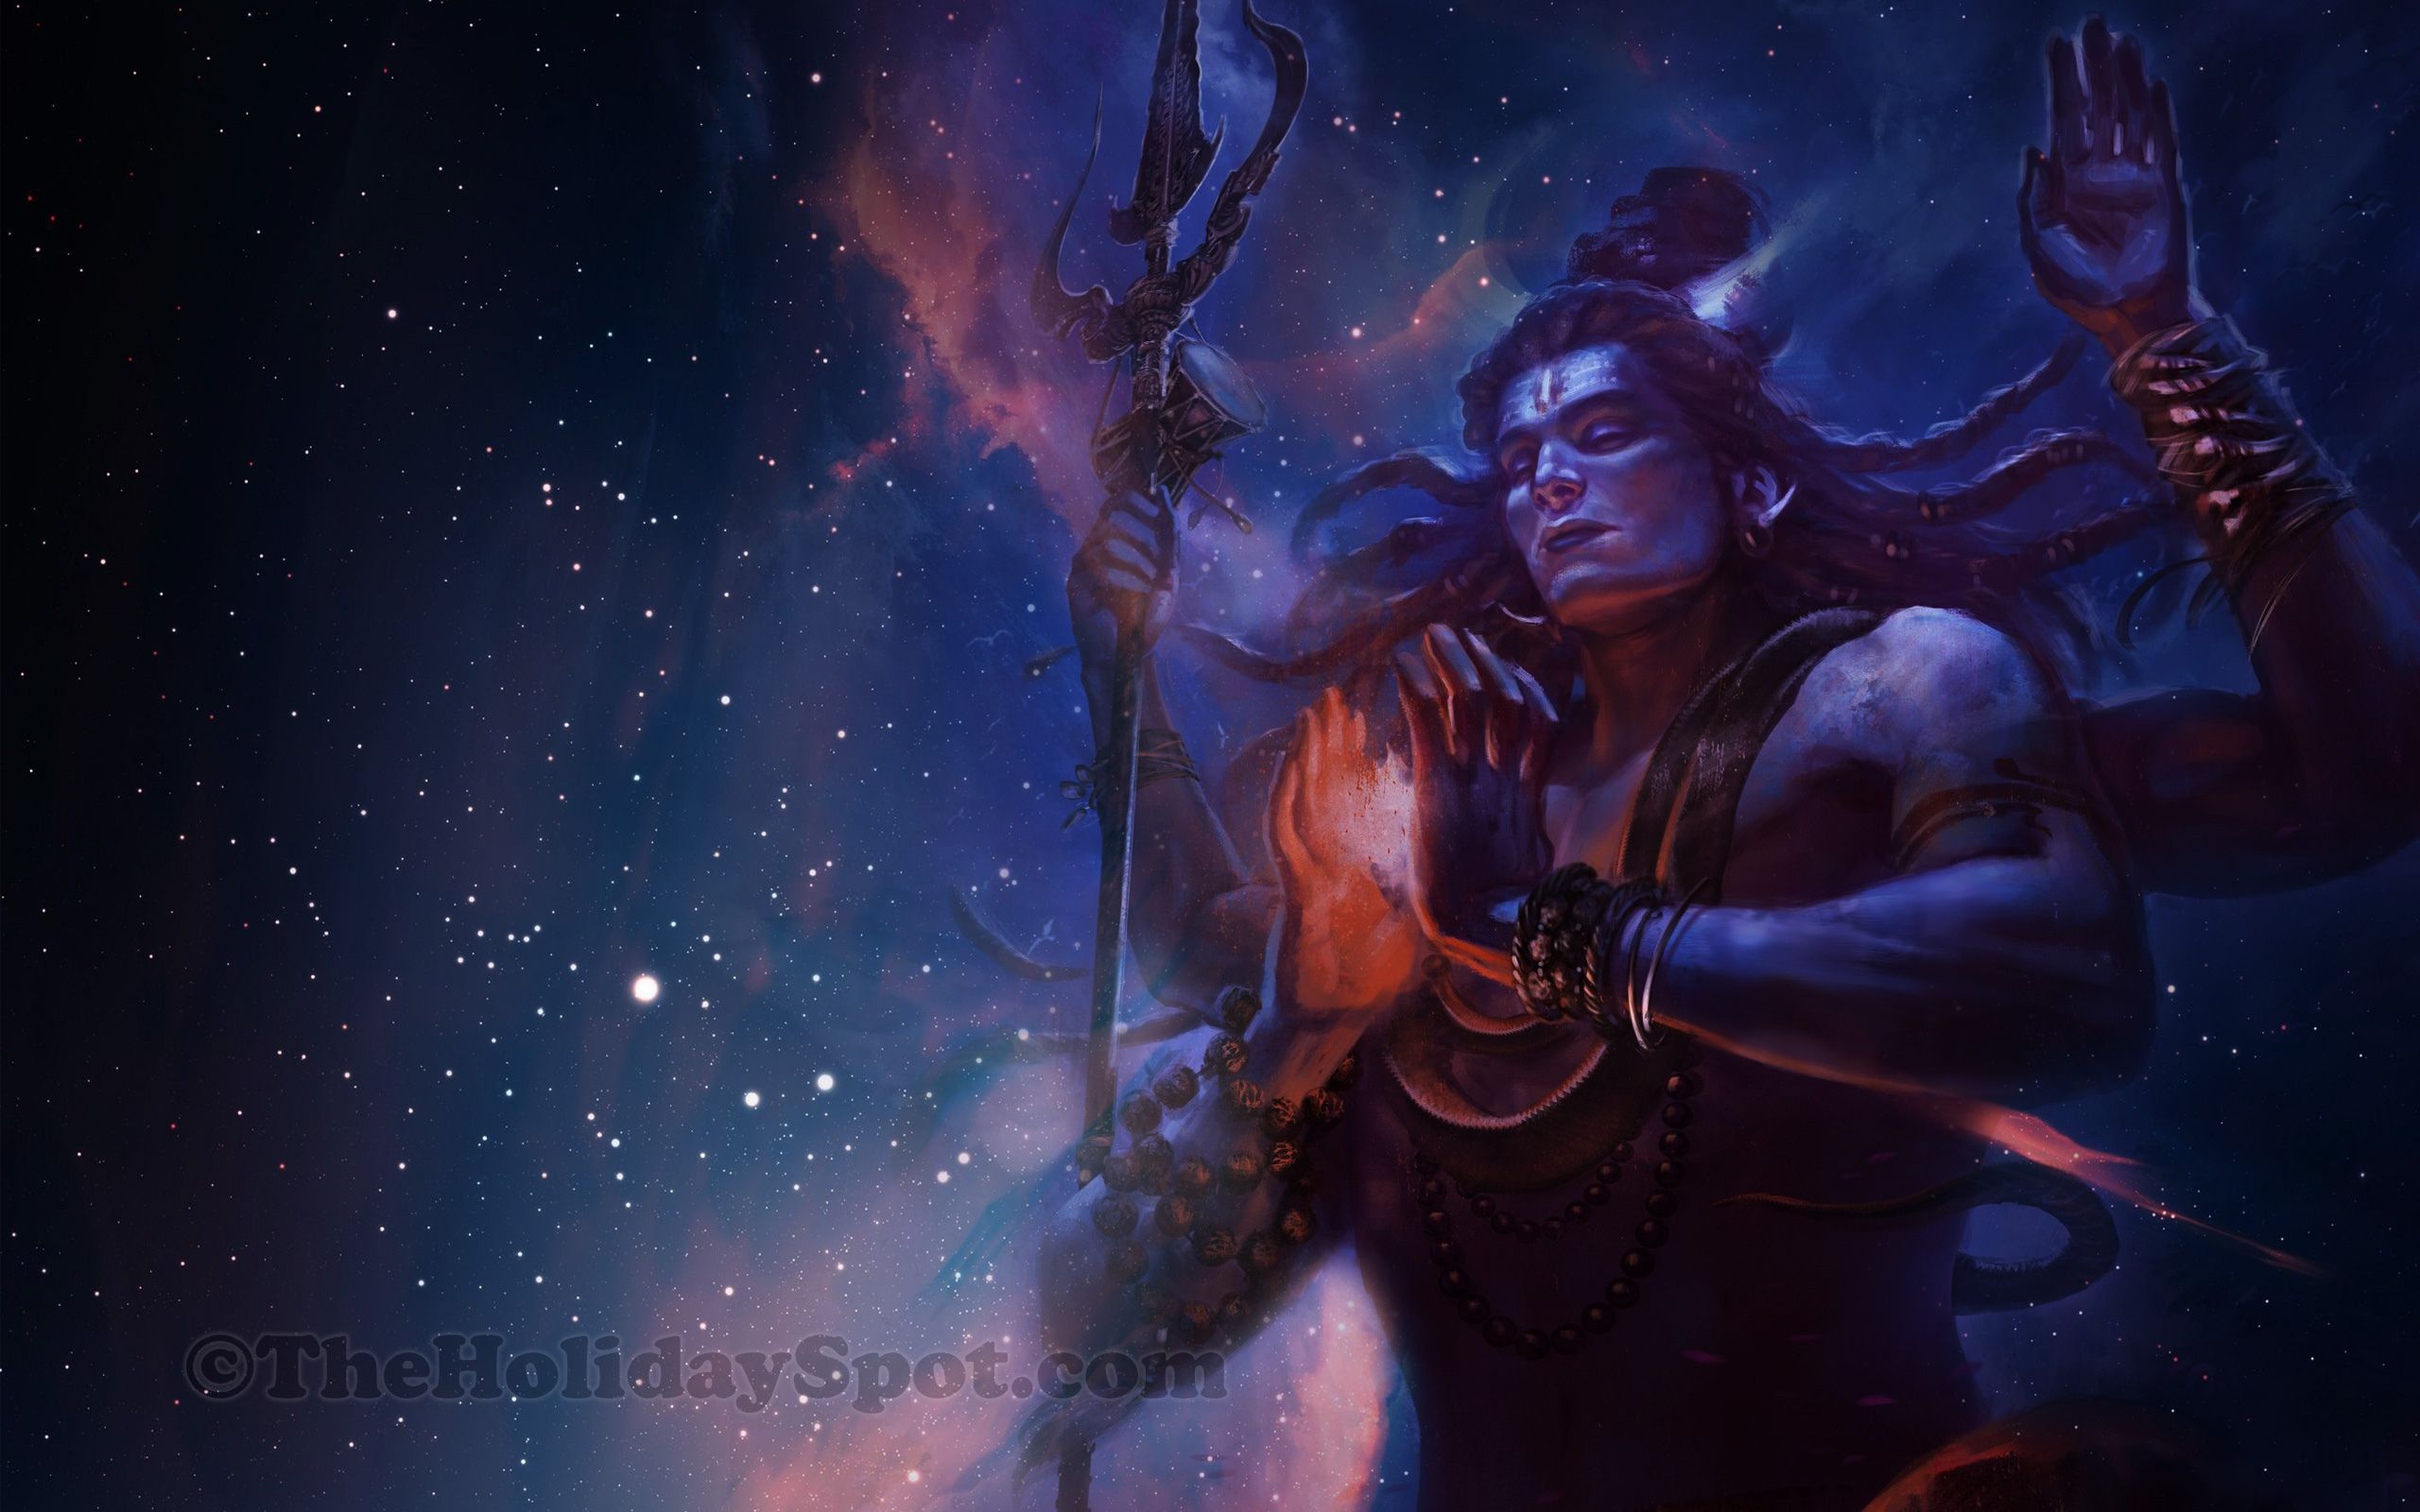 Lord Shiva 4k QHD Wallpapers - Wallpaper Cave